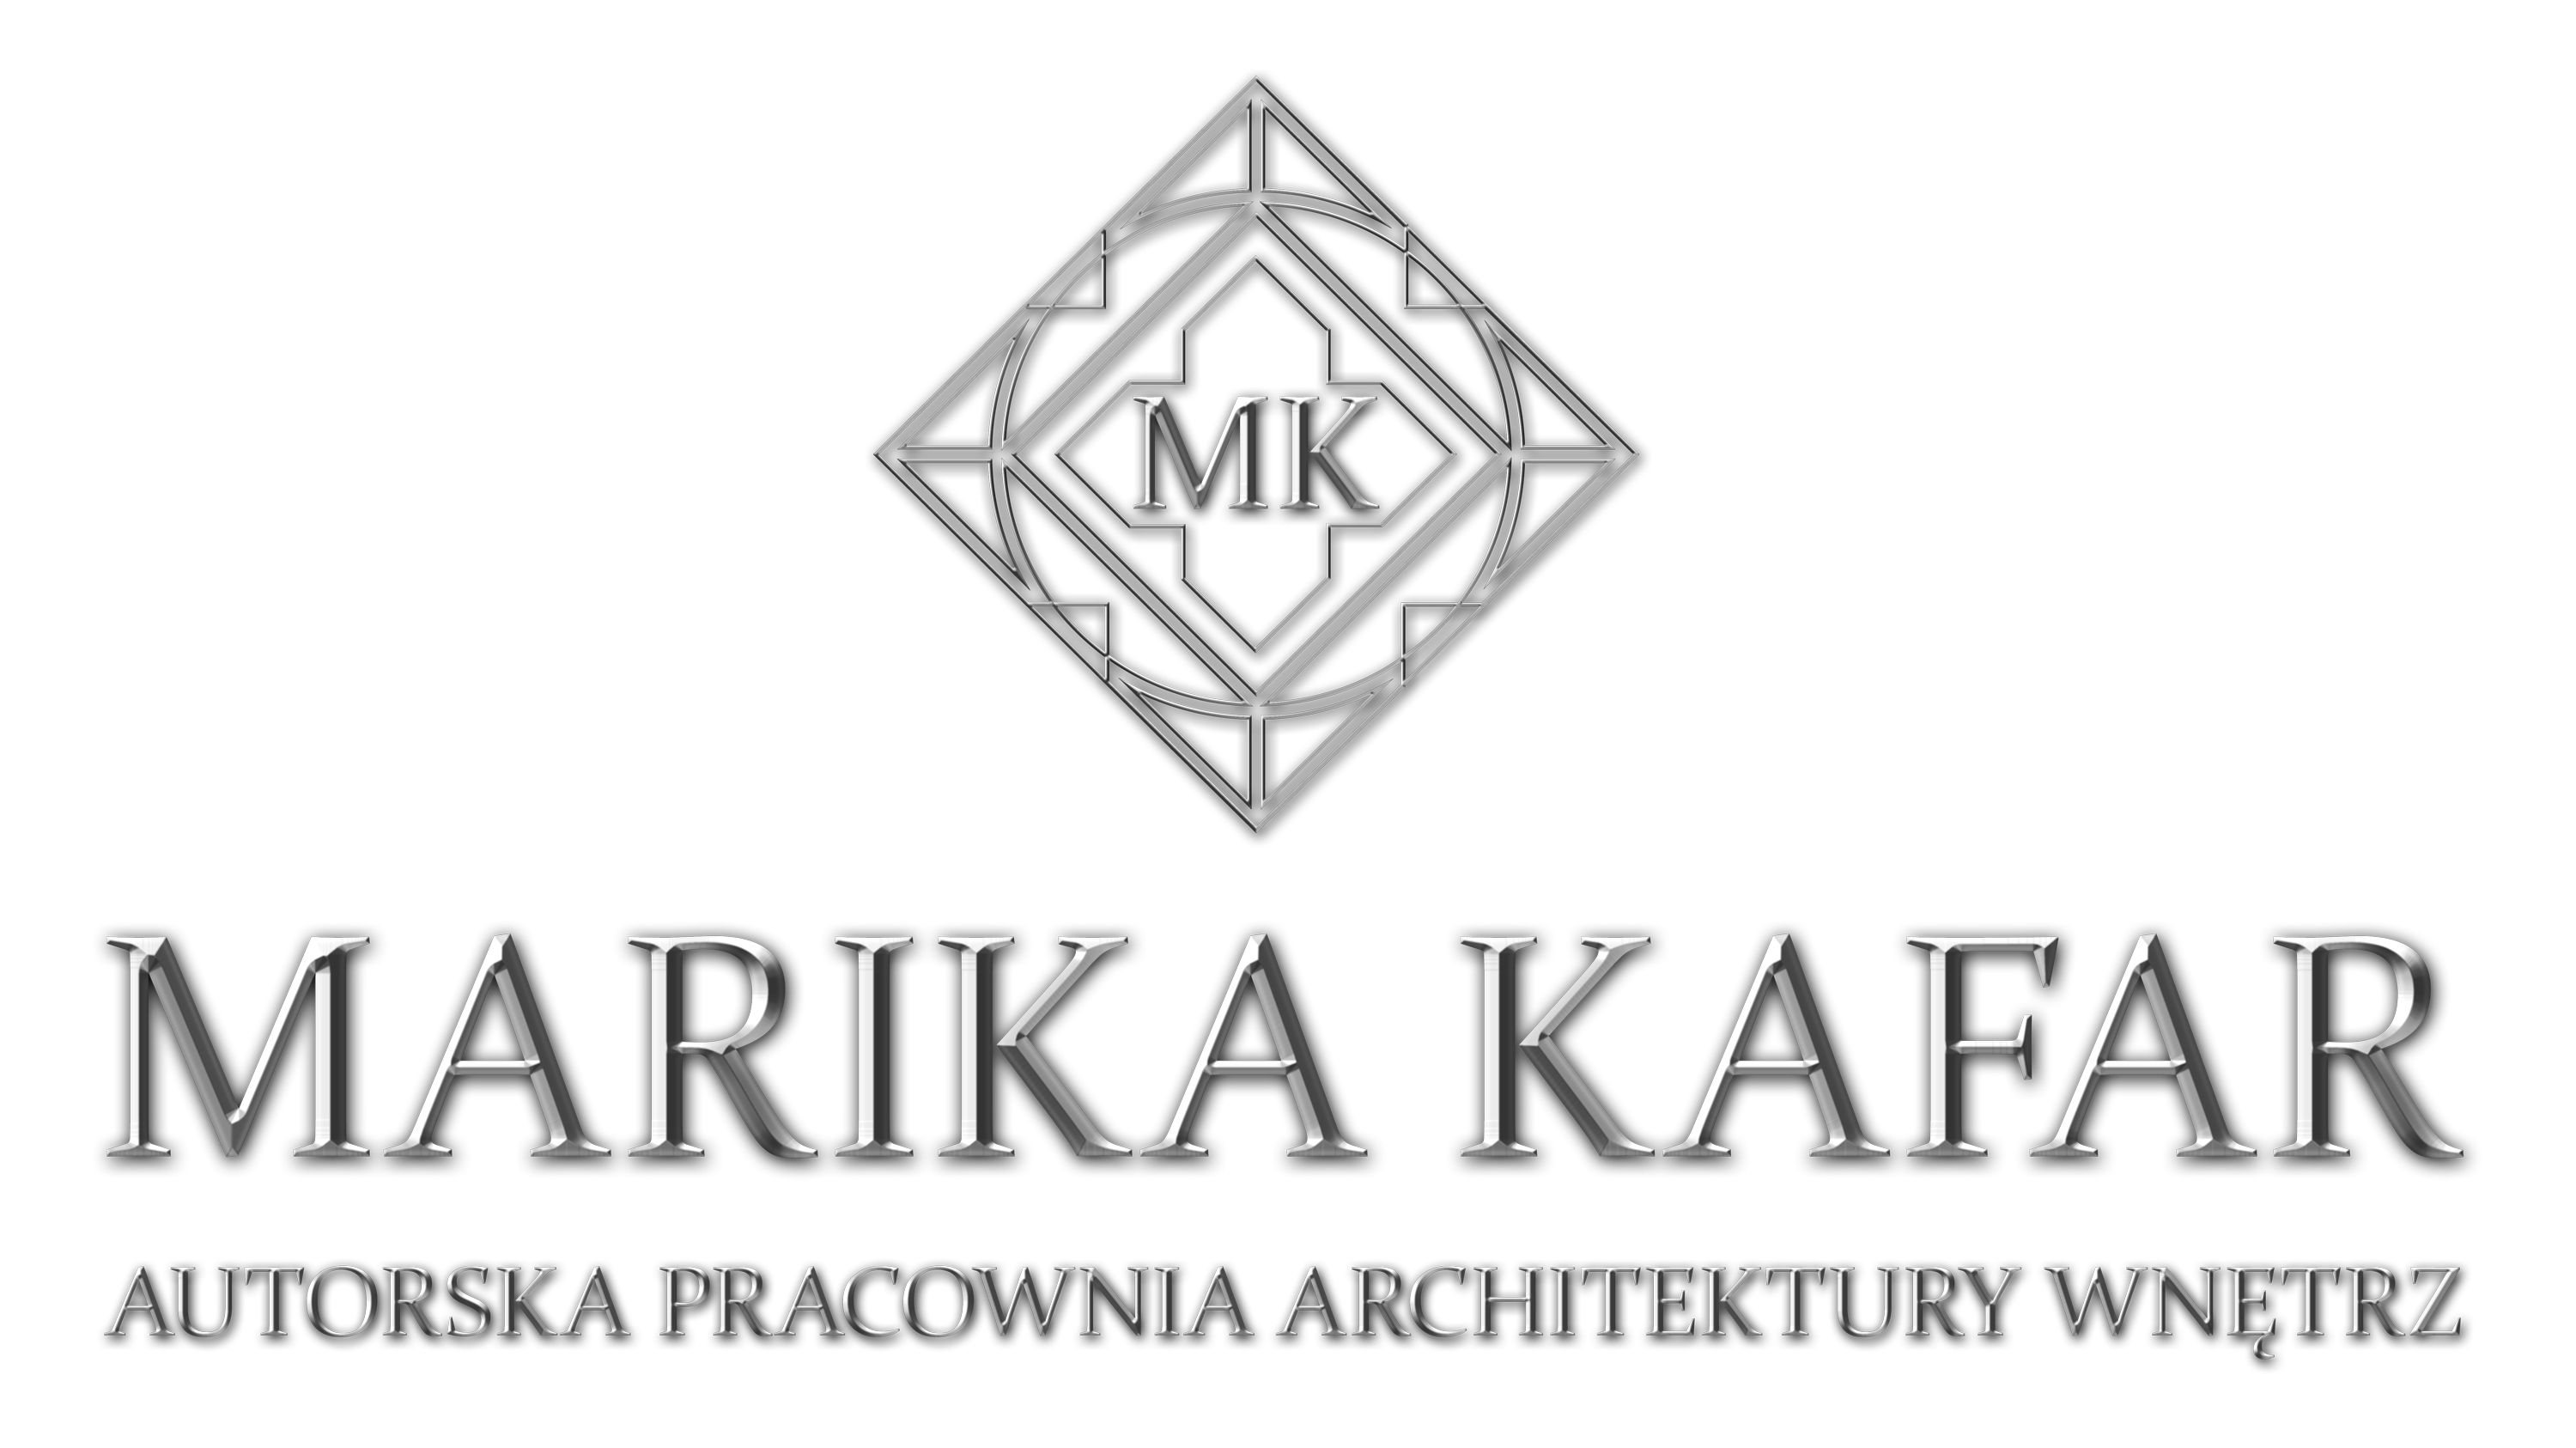 Marika Kafar Autorska Pracownia Architektury Wnetrz 